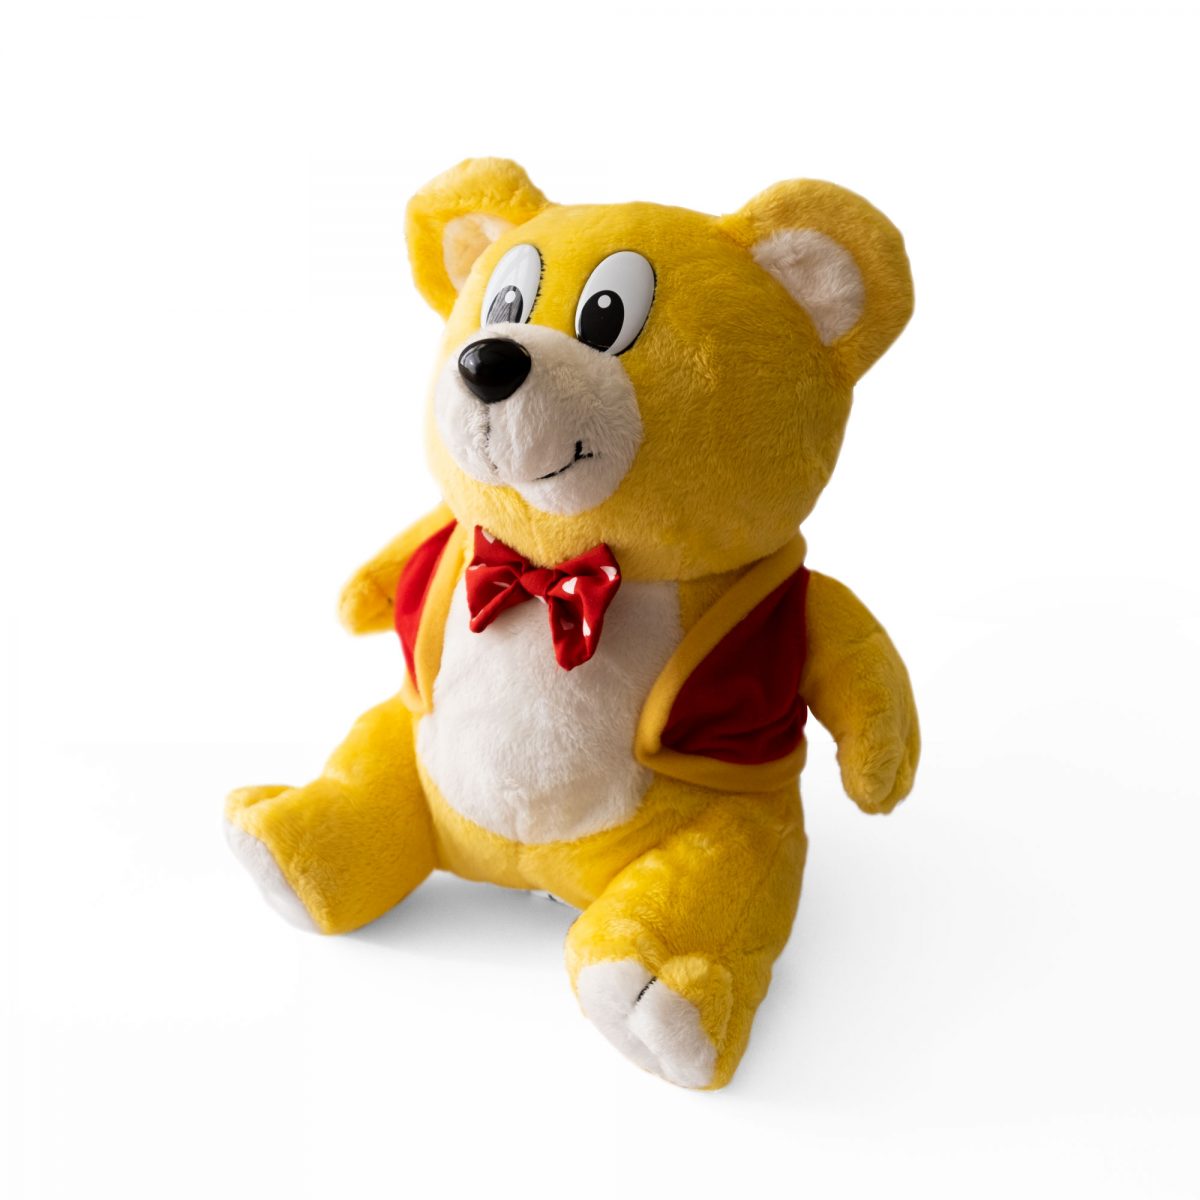 A Woolly Bear soft toy